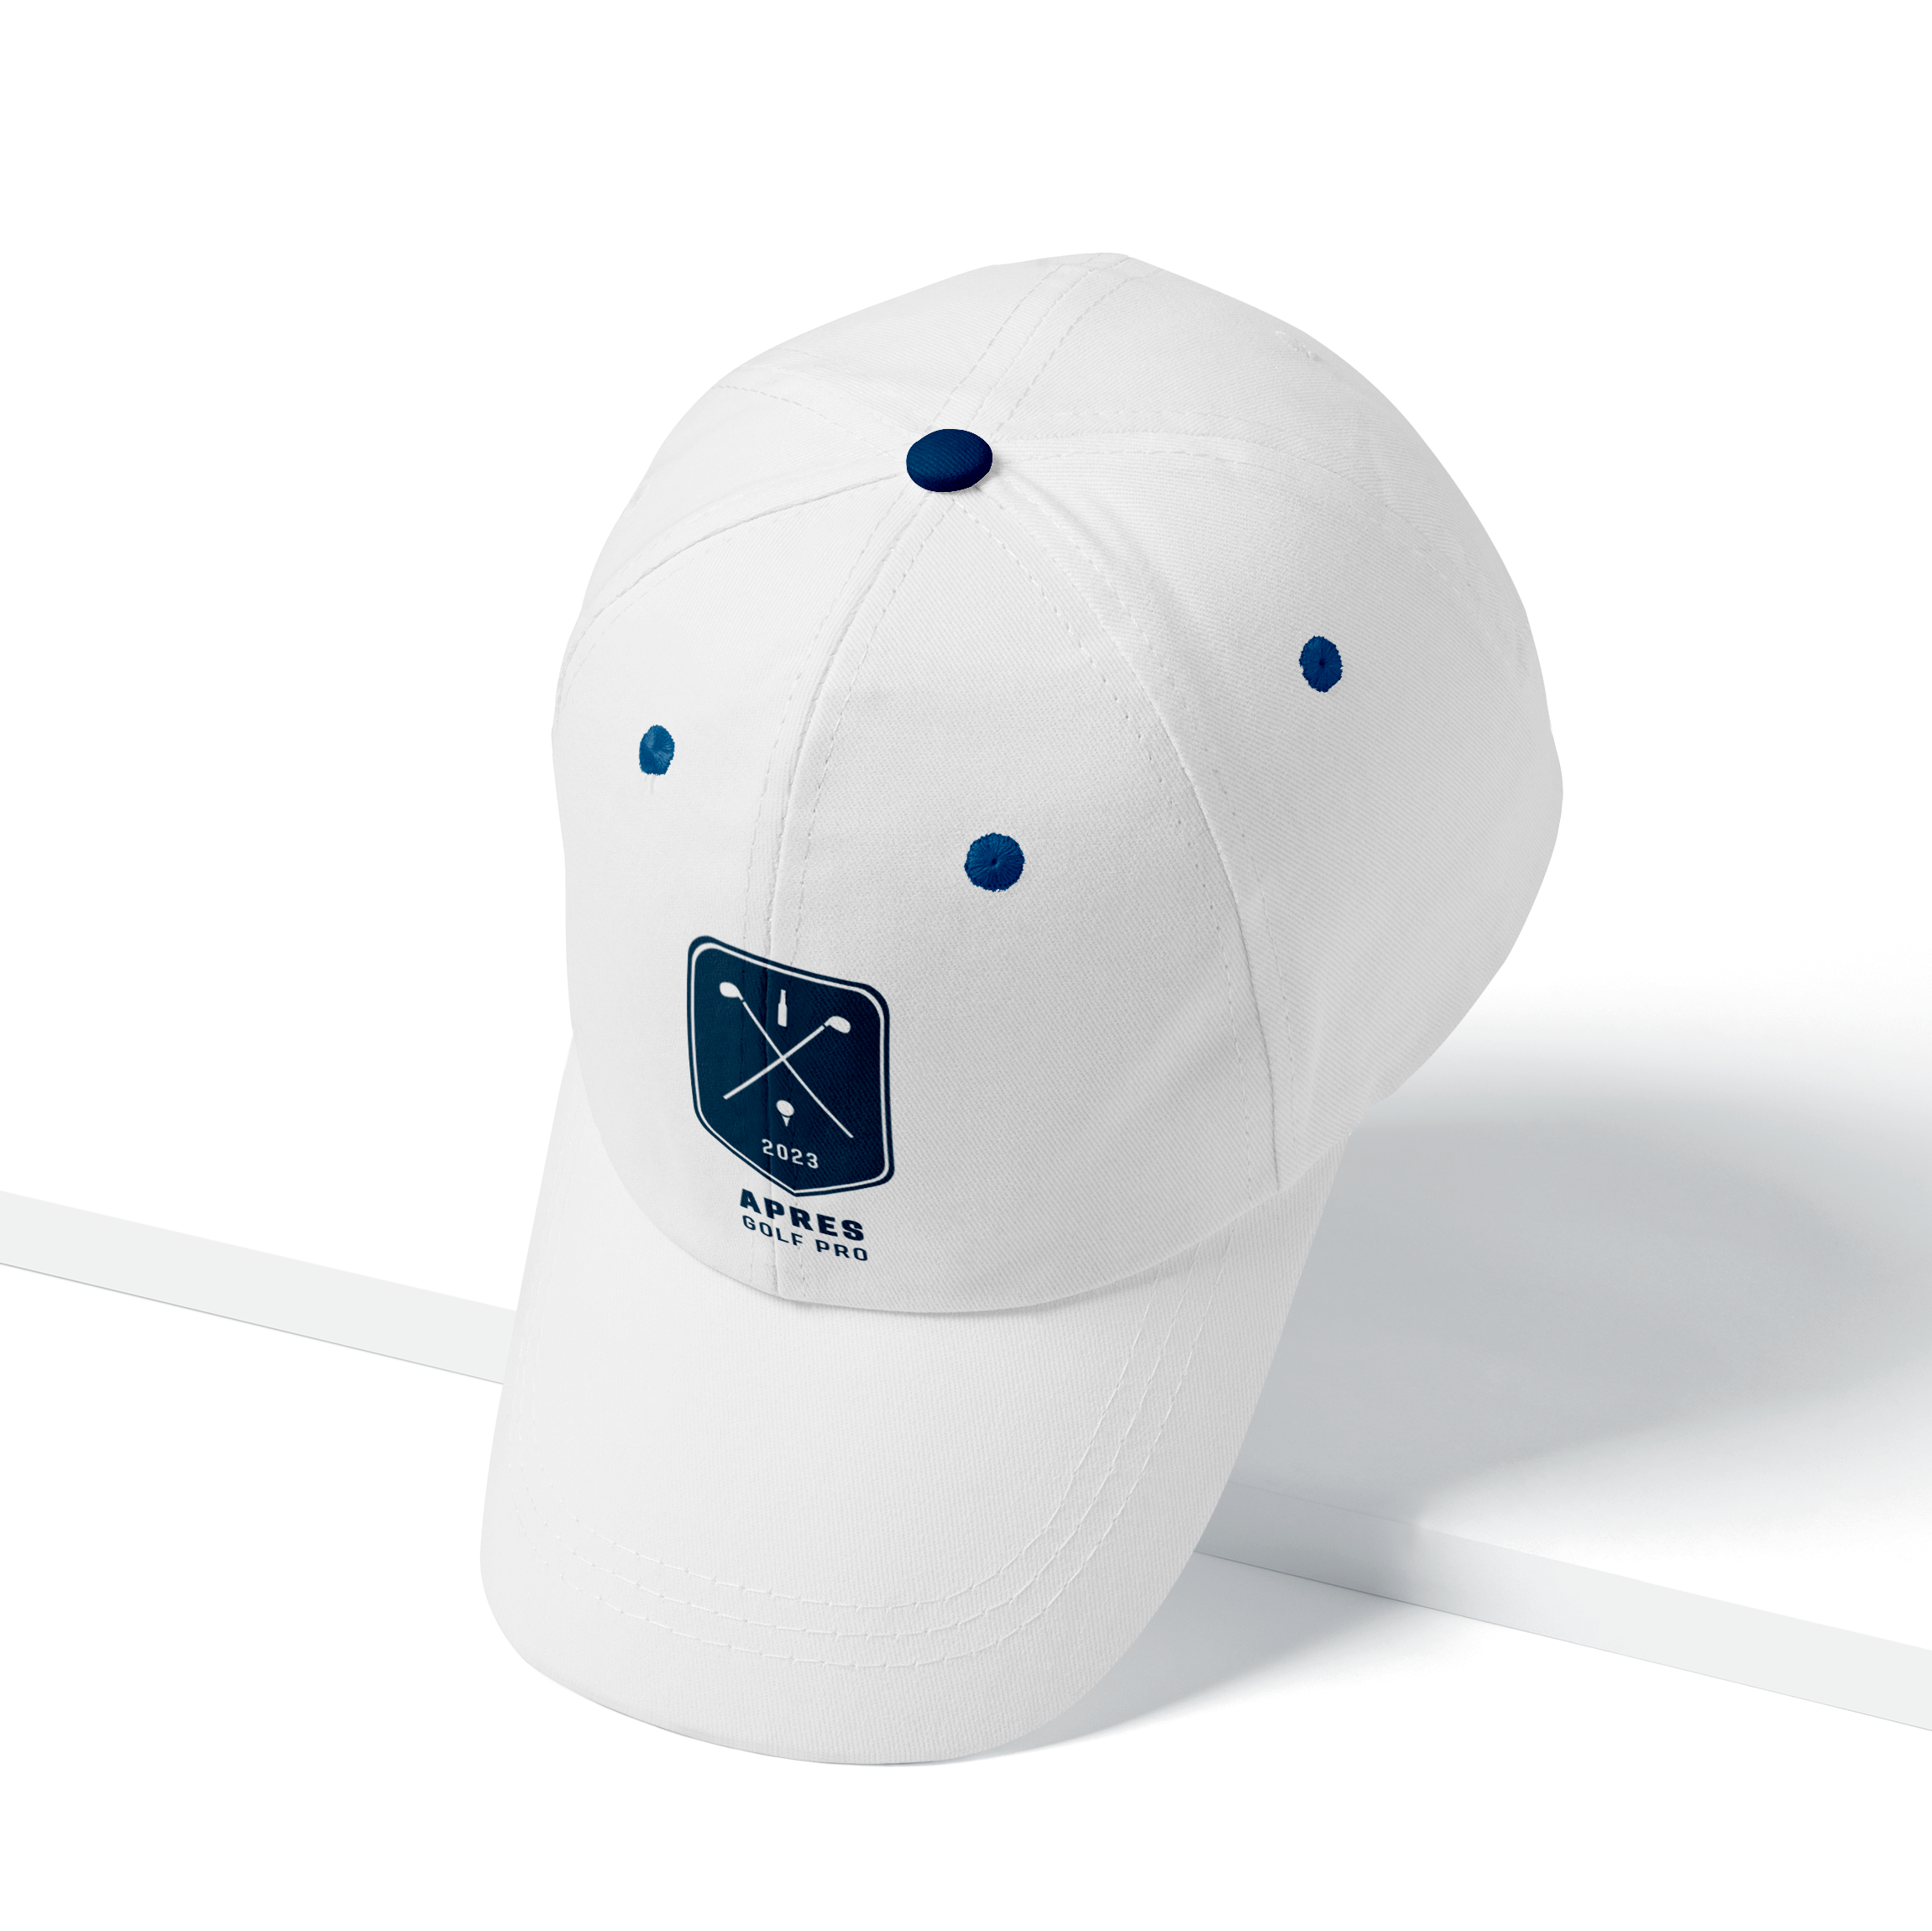 DayDrinker Apres Golf Pro Dad Hat